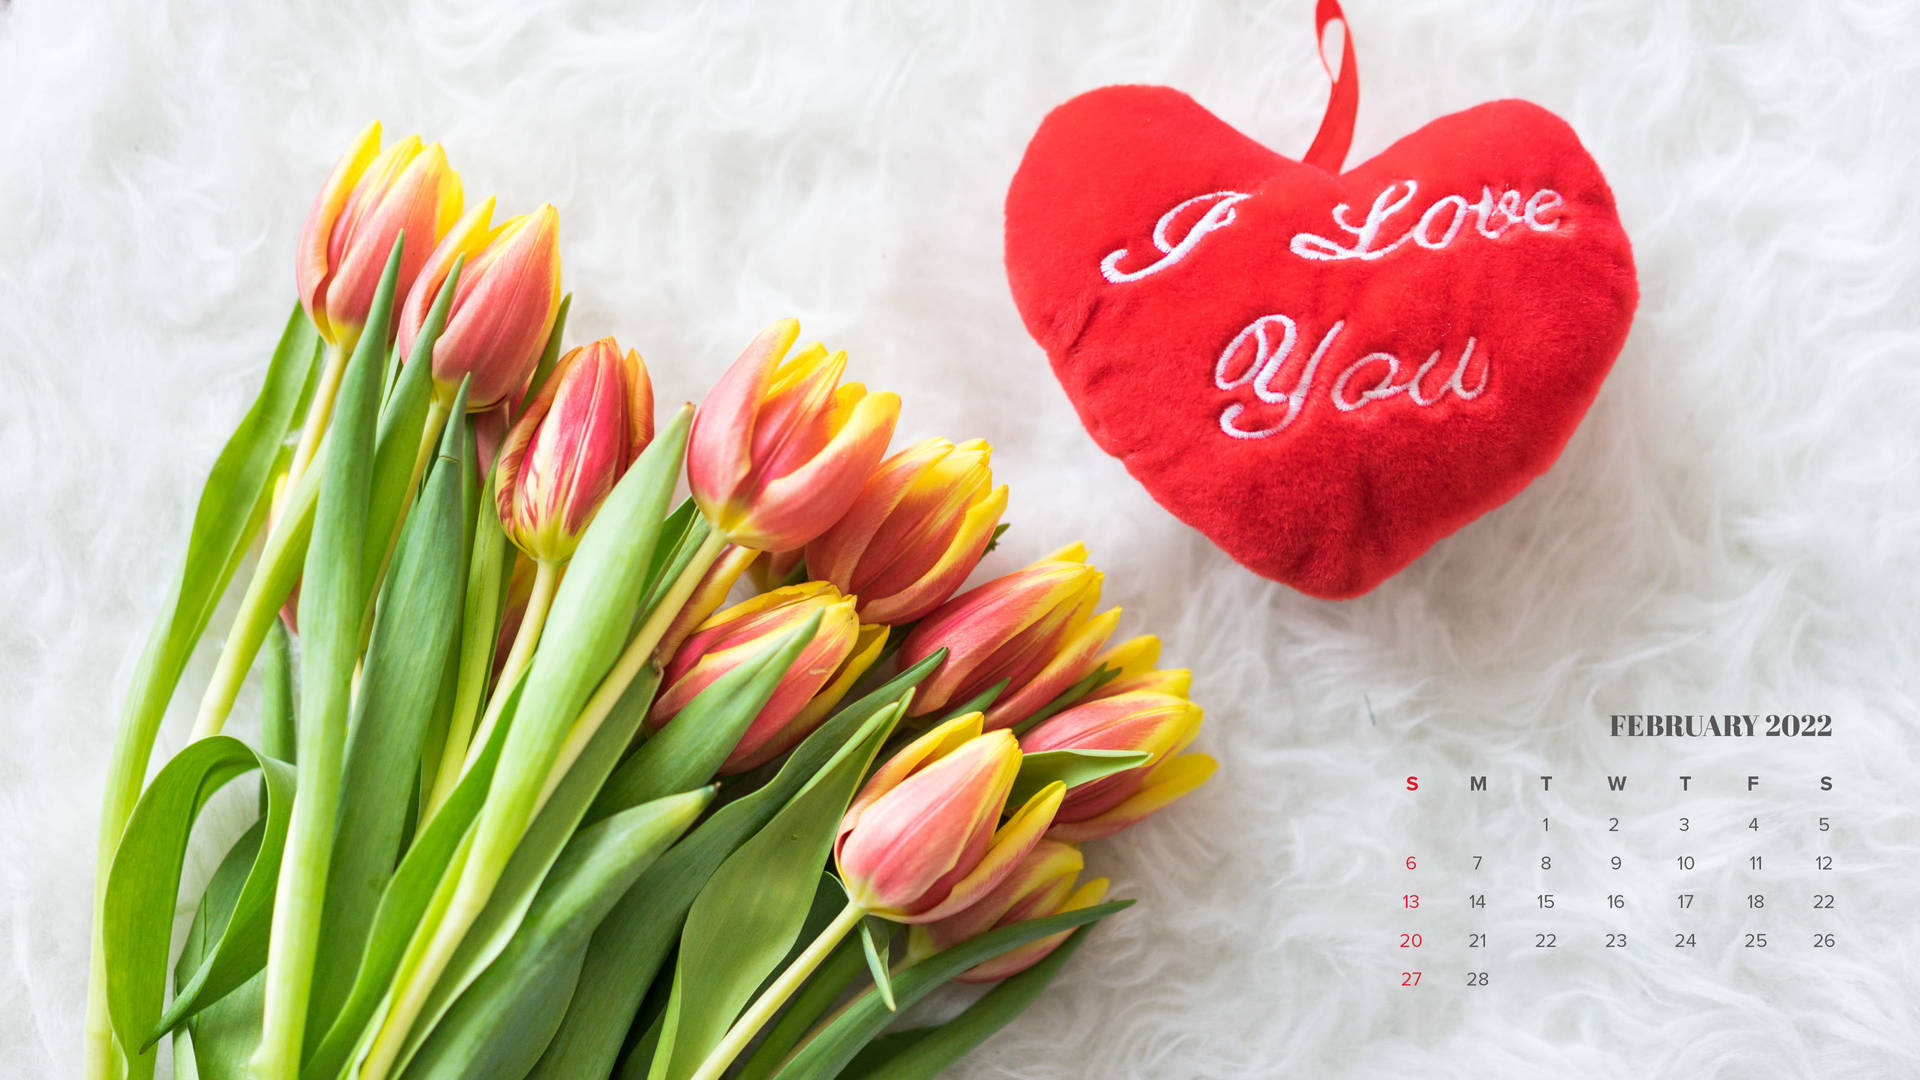 Tulips February 2022 Calendar